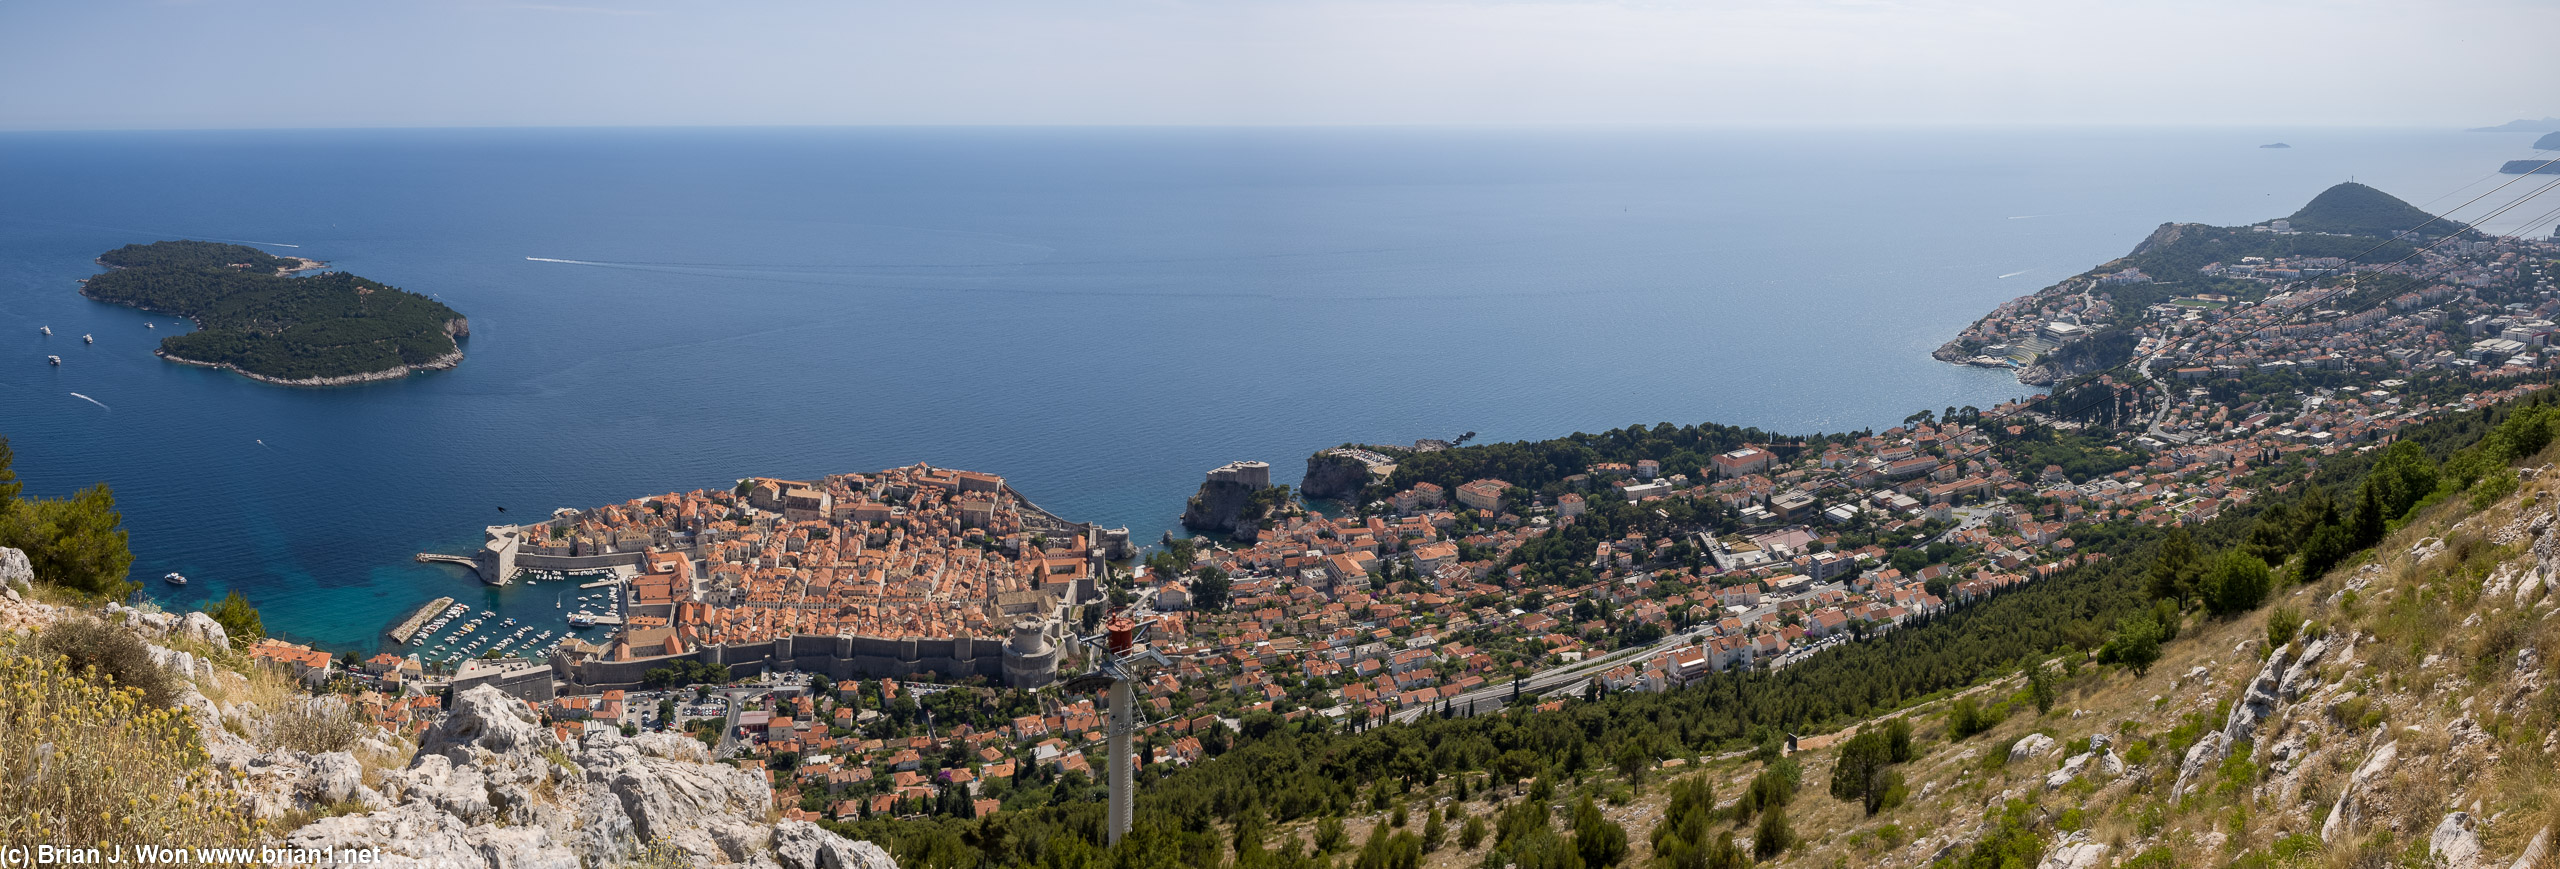 Dubrovnik, below Mt. Srd. Cable car tower visible, too.